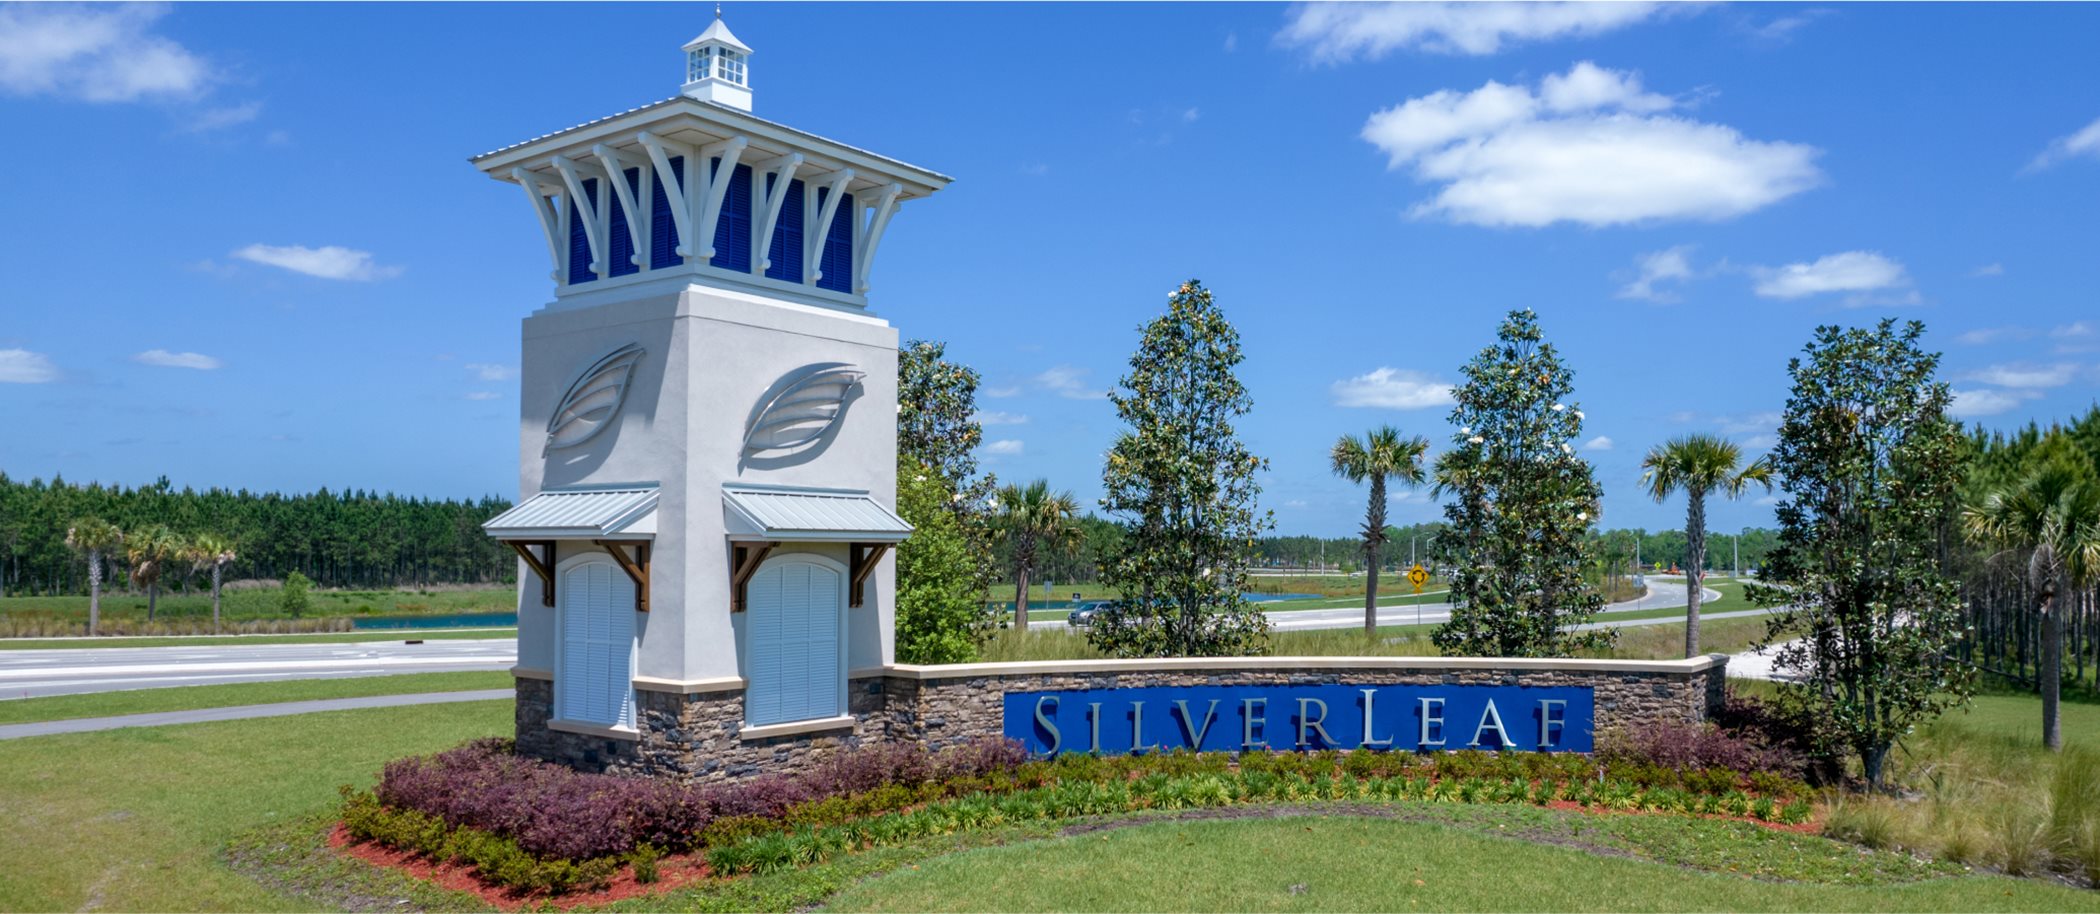 Silverleaf Entry monument 